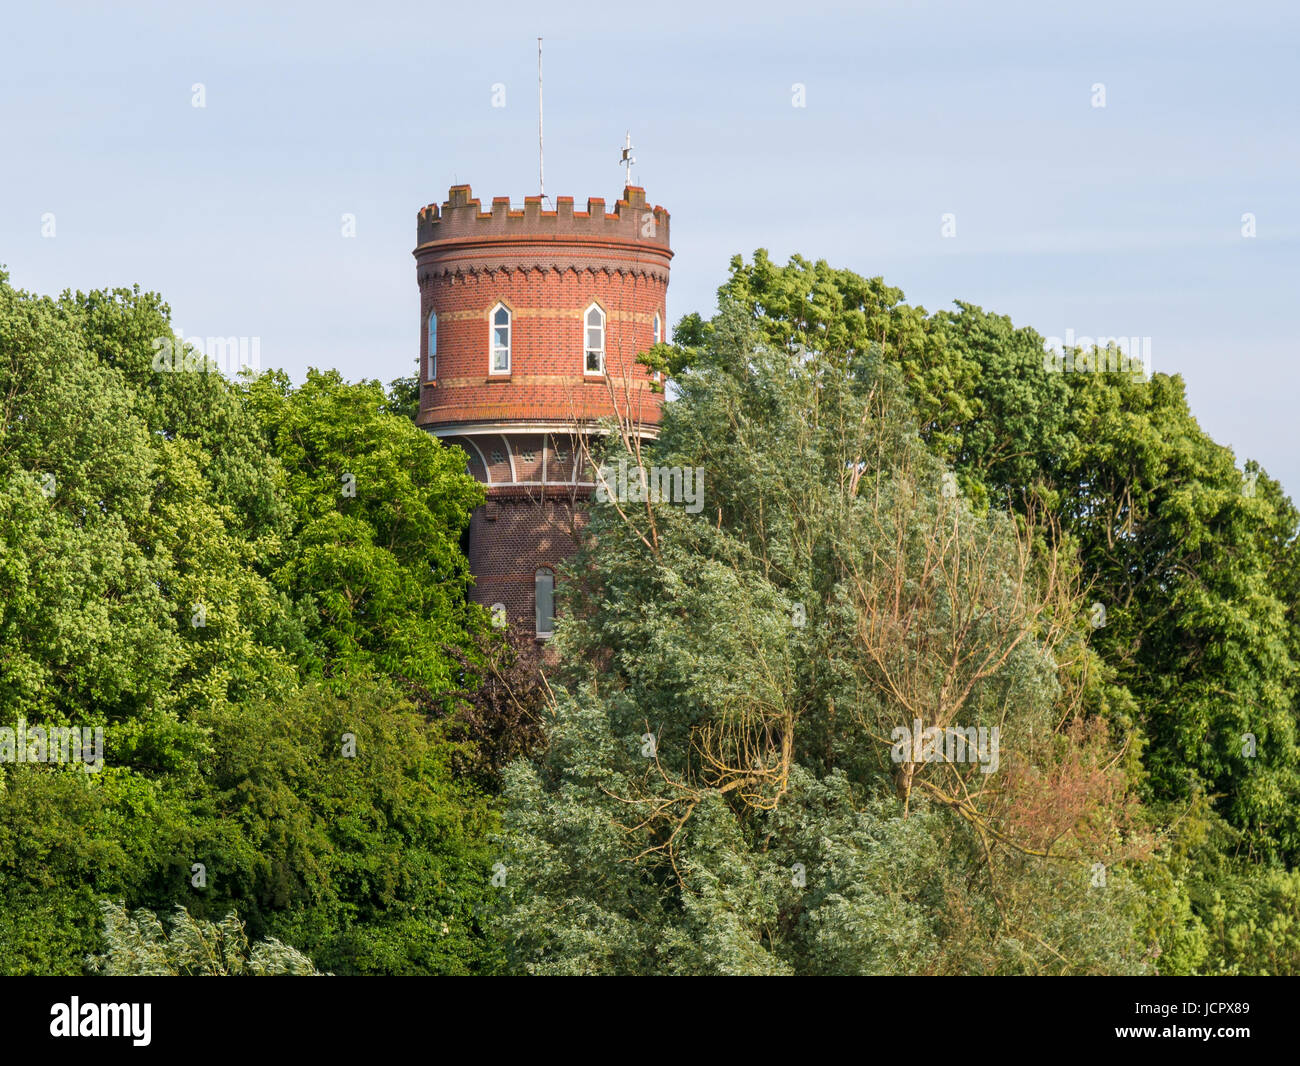 Old water tower hidden in trees in fortified town of Zaltbommel, Gelderland, Netherlands Stock Photo